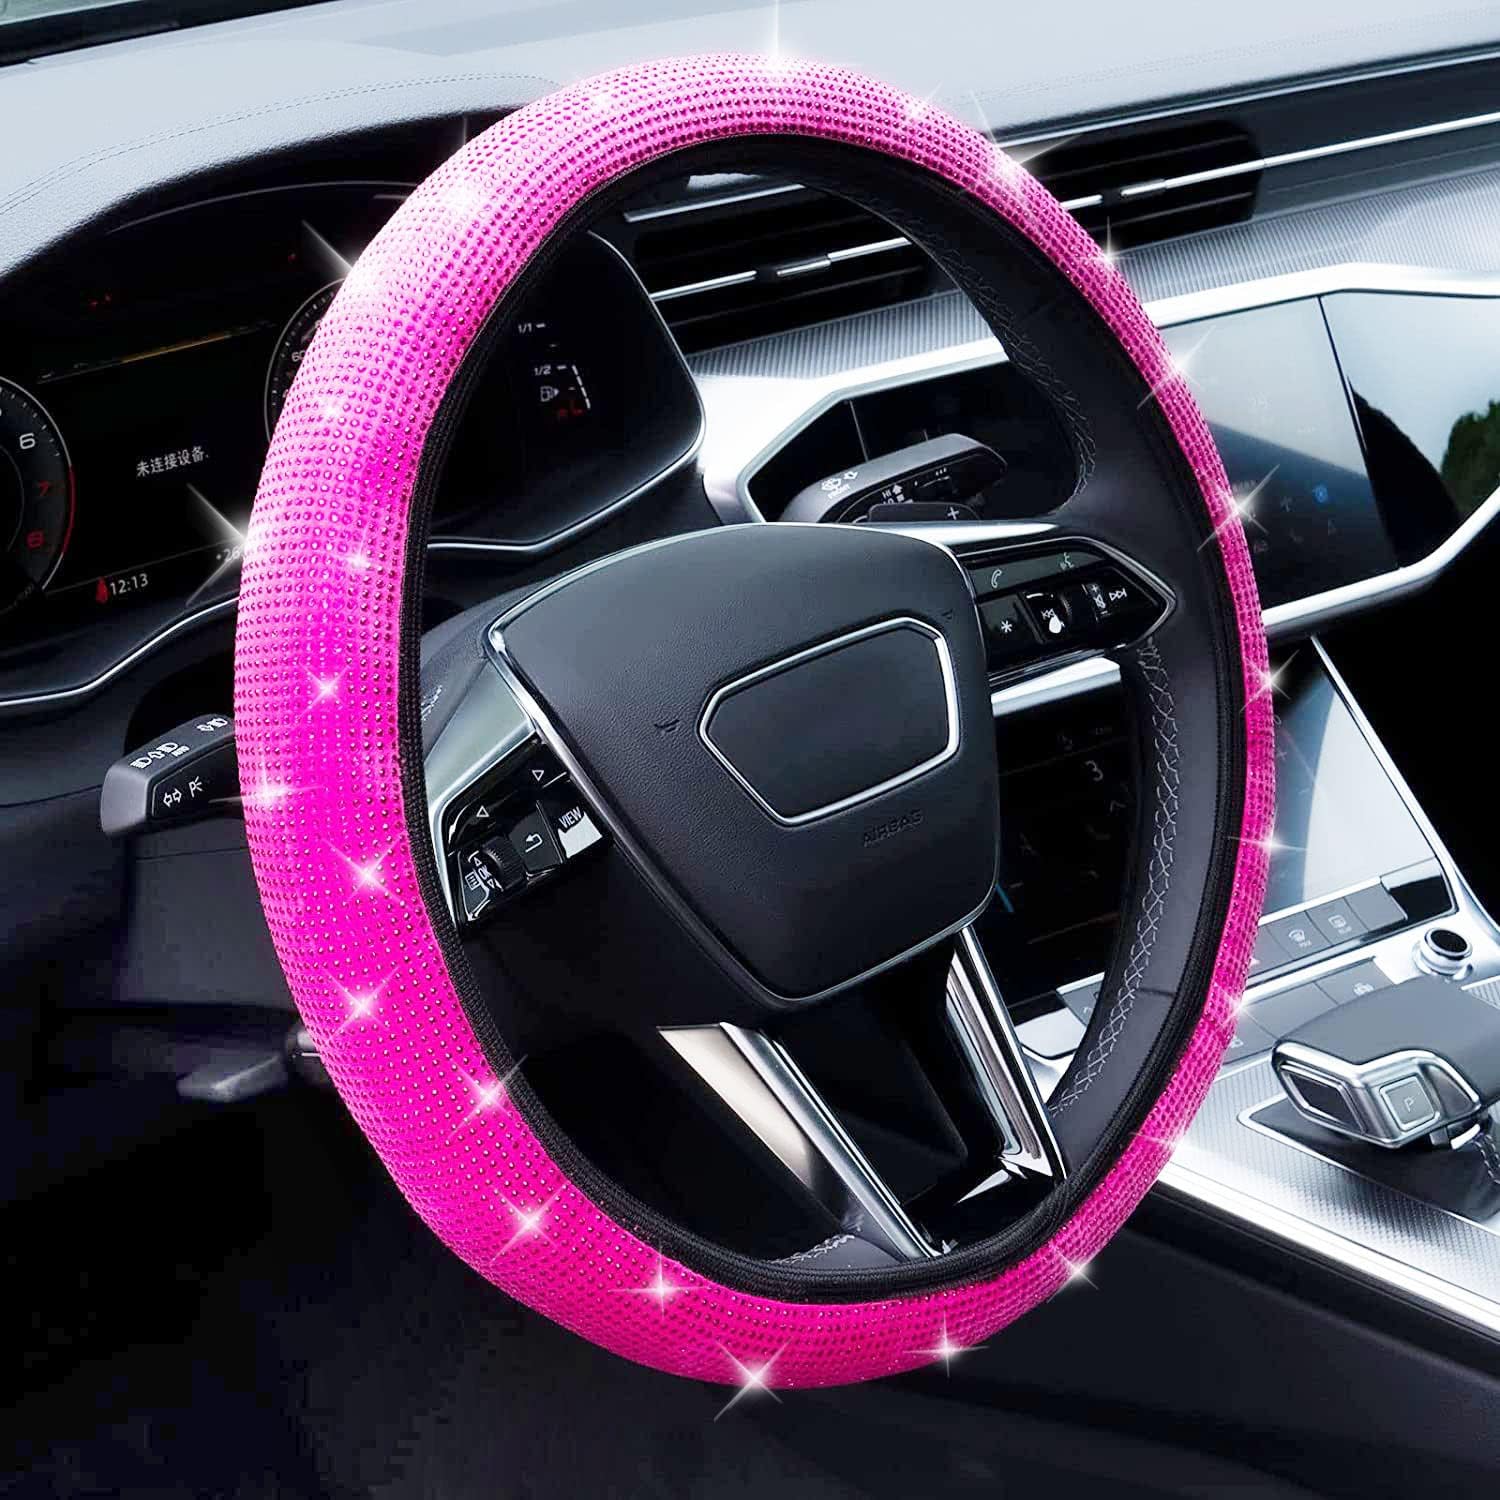 Bling Diamond Leather Steering Wheel Cover, with Sparkly Crystal Glitter Rhinestones Universal Fit 14" 1/2-15" Car Wheel Protector for Women Girl Fit Suvs,Vans,Sedans,Car,Trucks